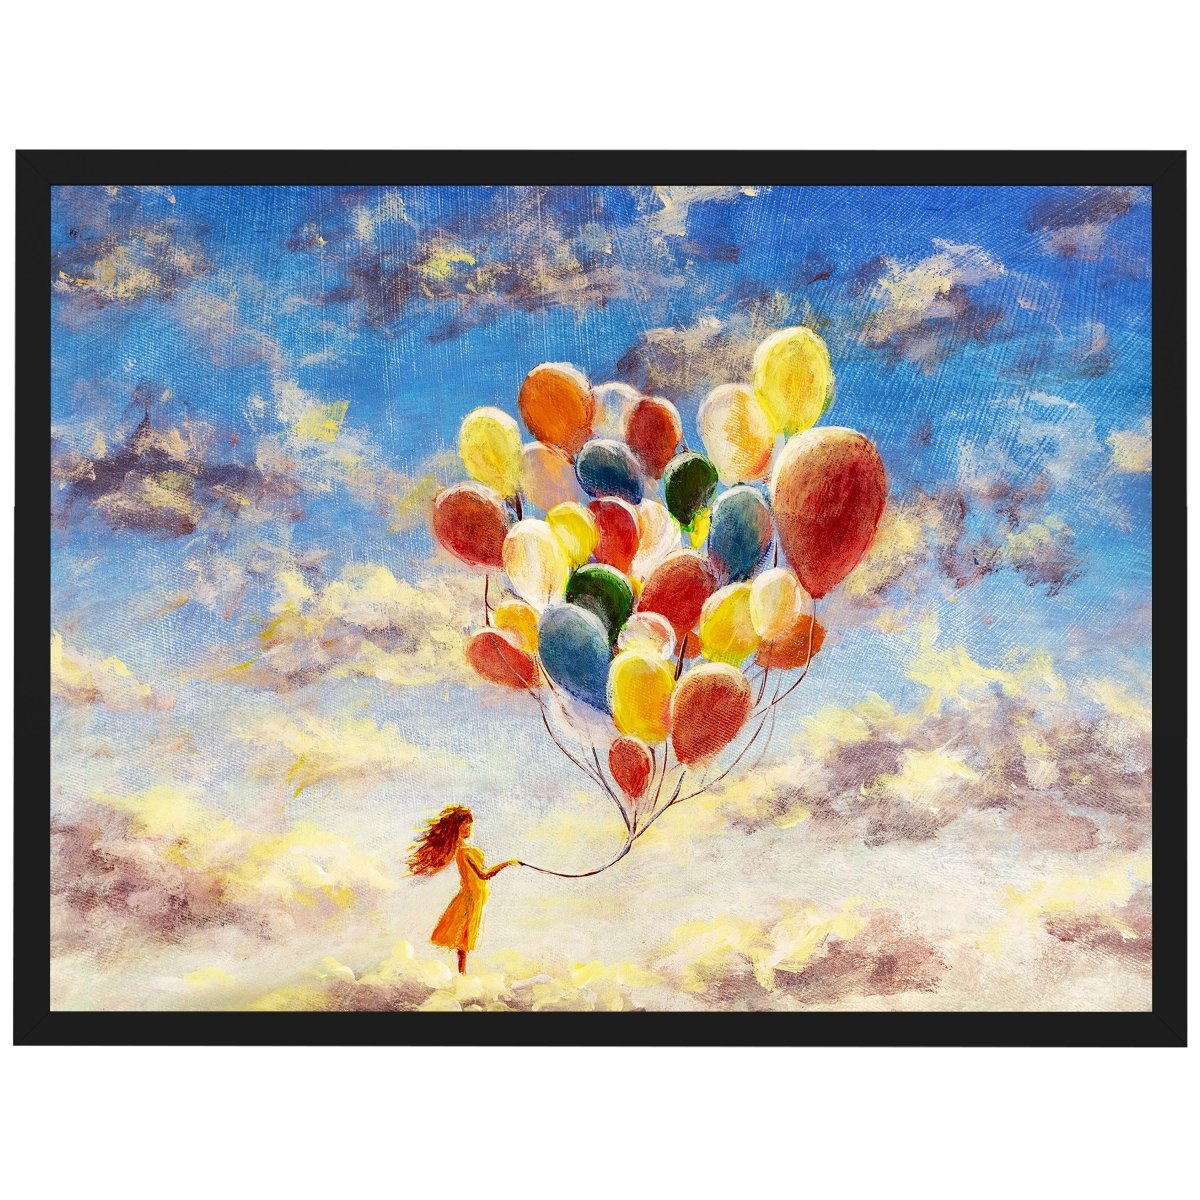 wandmotiv24 Poster, Poster - Gemälde, Malerei, Luftballons - M0236 - Bild 1